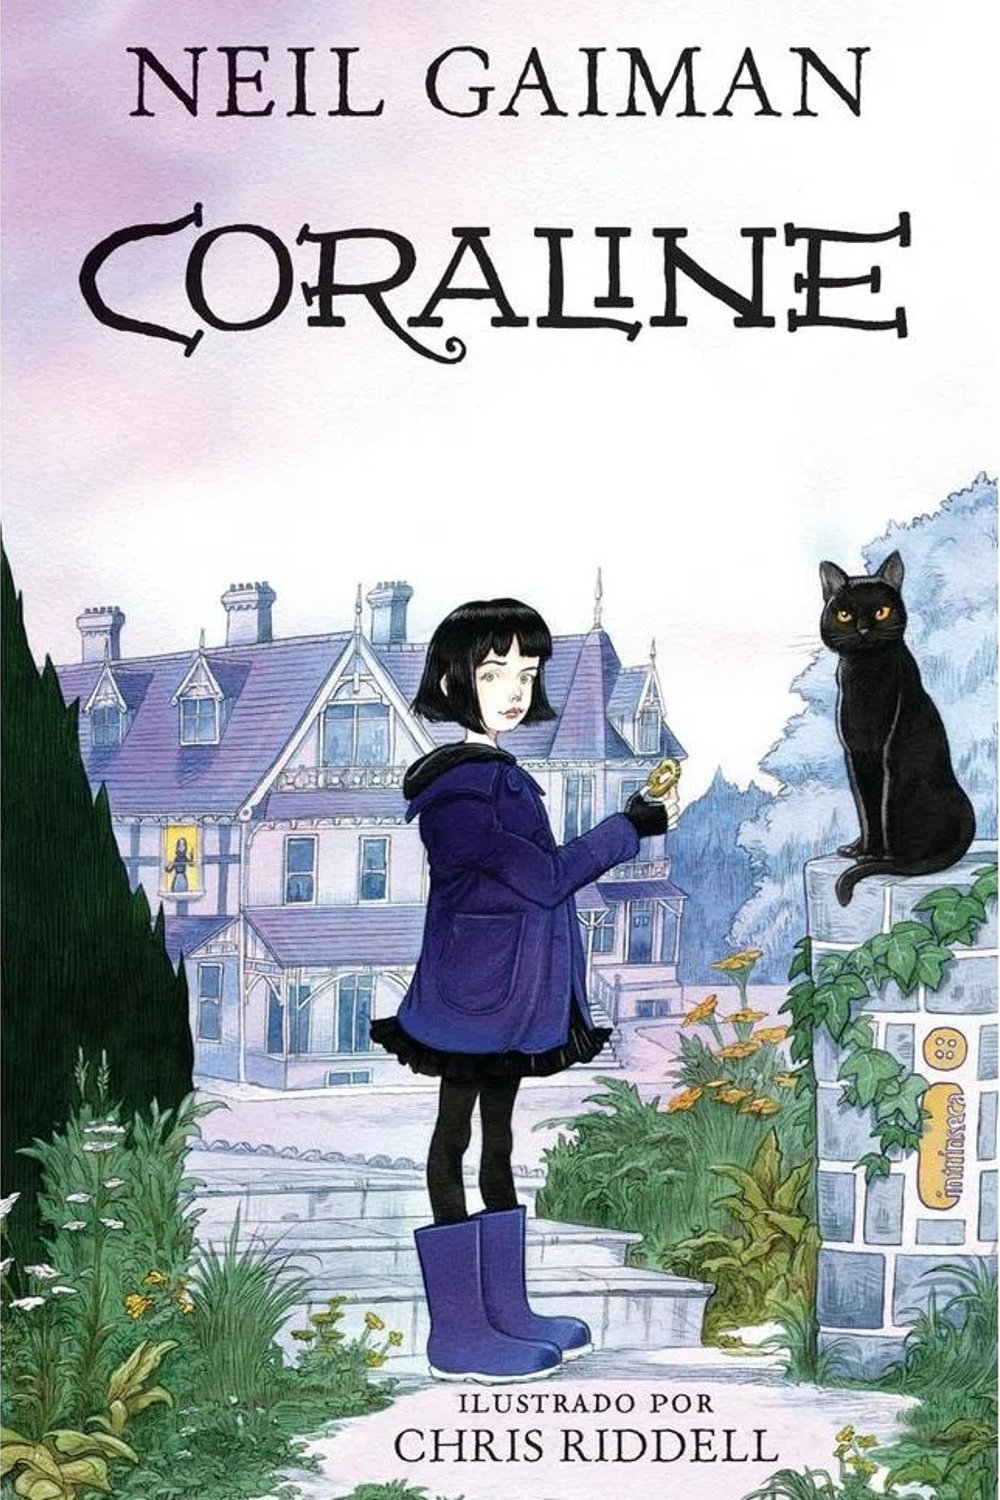 Coraline - precisa ler - livros de fantasia - livro de fantasia - geek - https://stealthelook.com.br